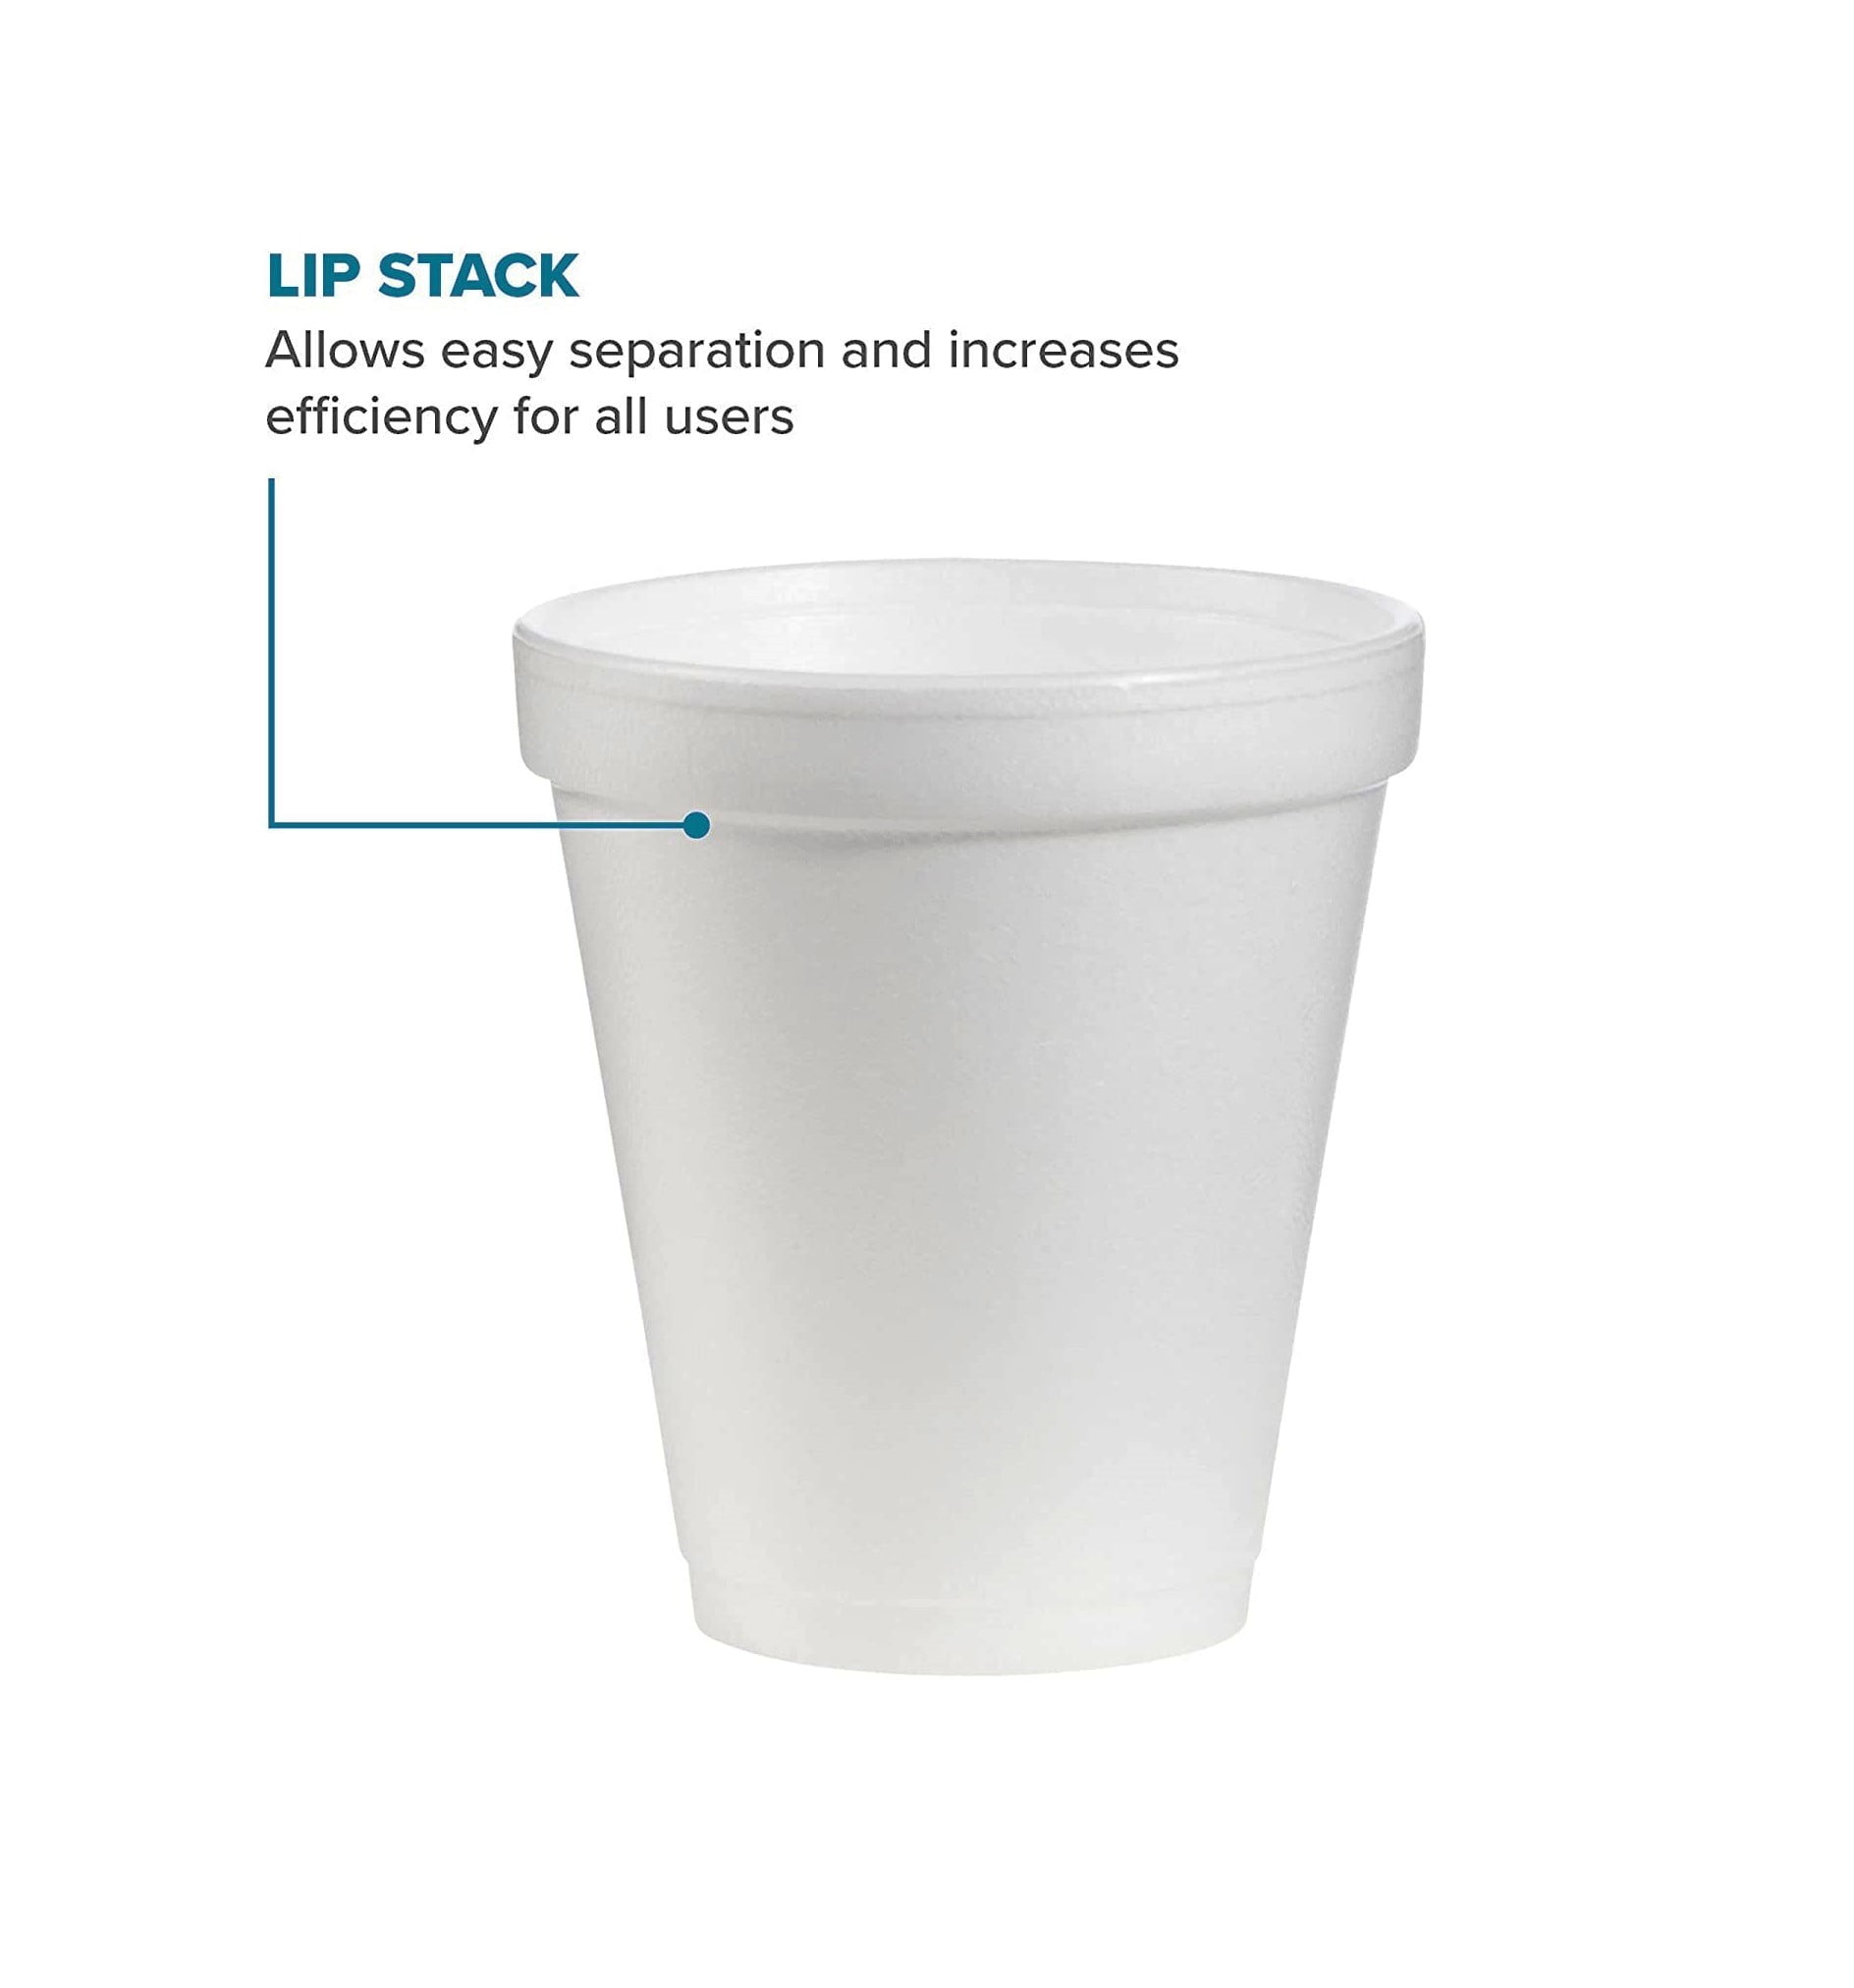 Dart Uncoated Paper Cups, Hot Drink, 8 Oz, White, 1,000/carton - Mfr Part#  U508N-02050